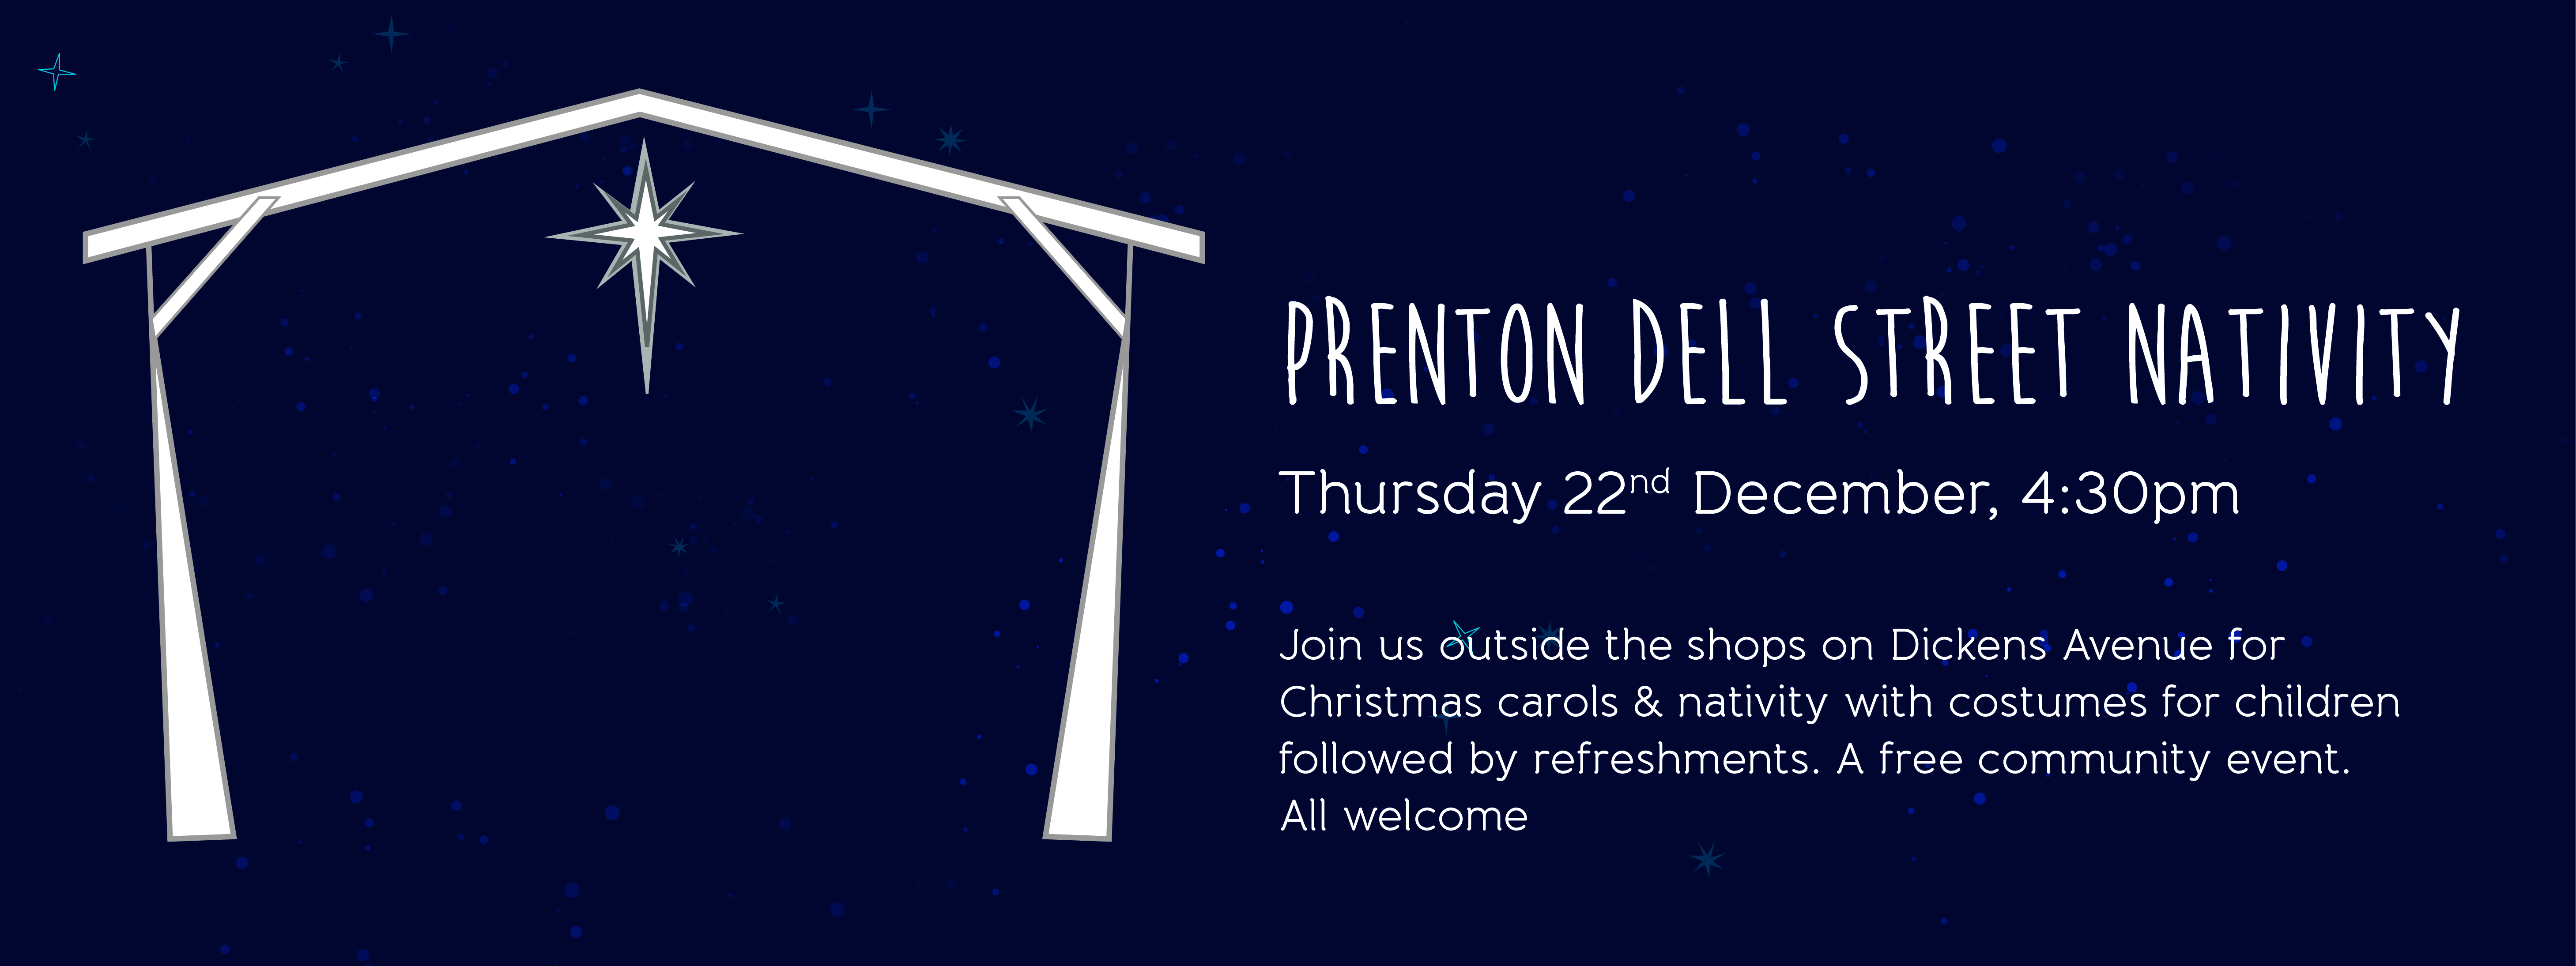 Prenton Dell Street Nativity, click here for more details